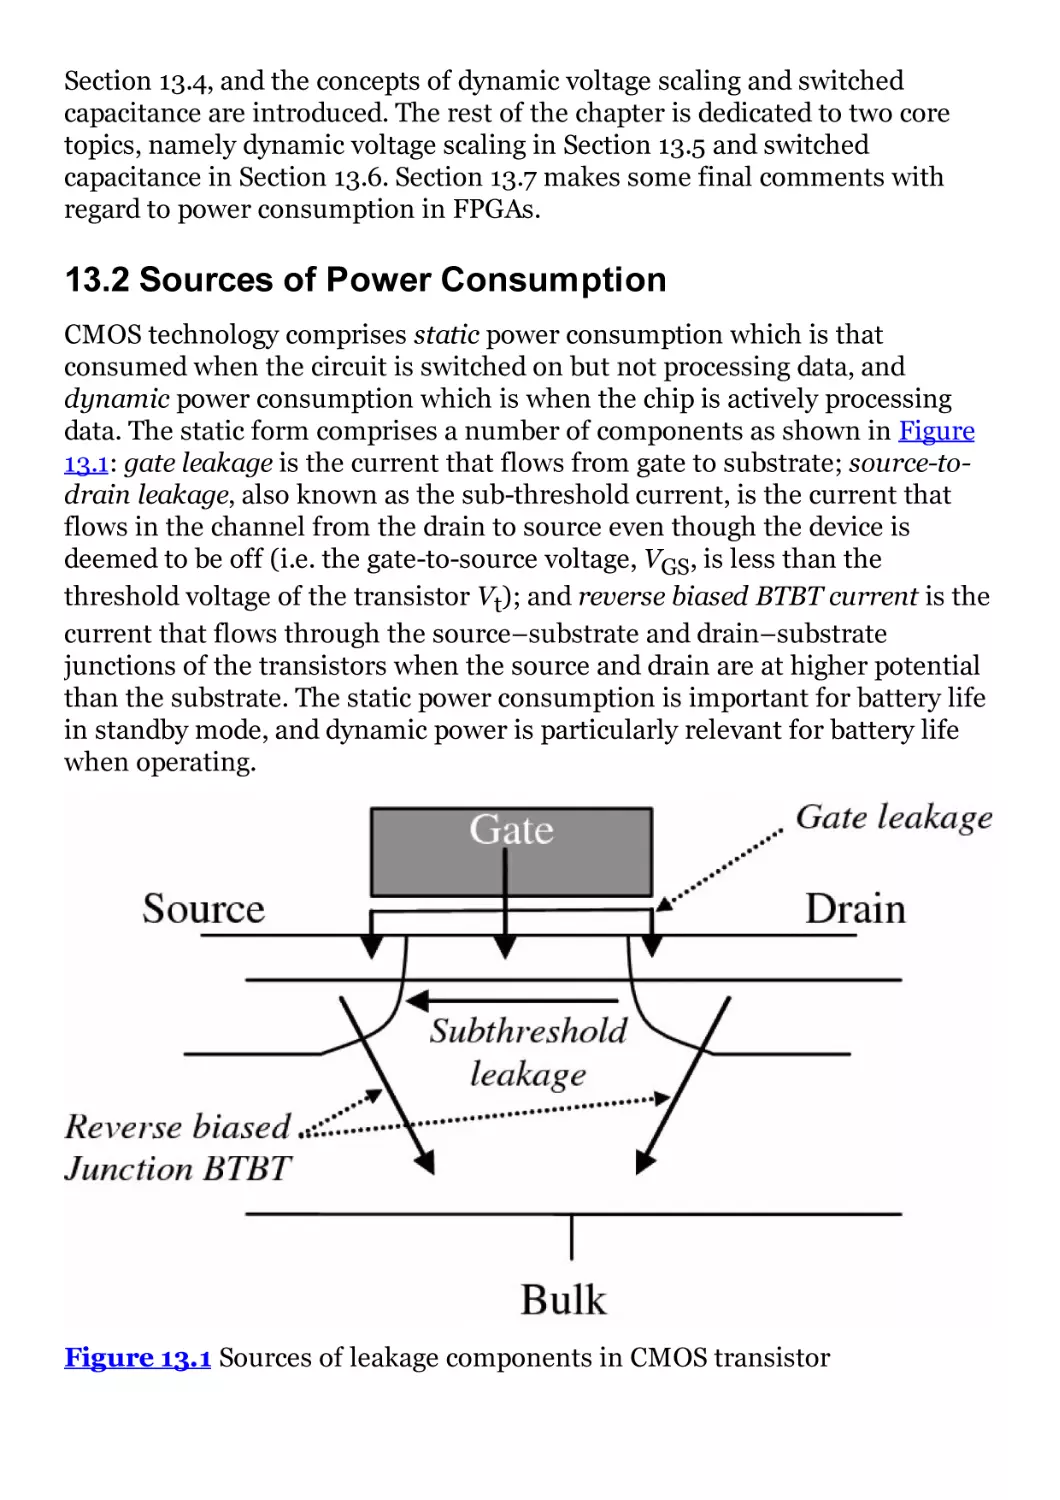 13.2 Sources of Power Consumption